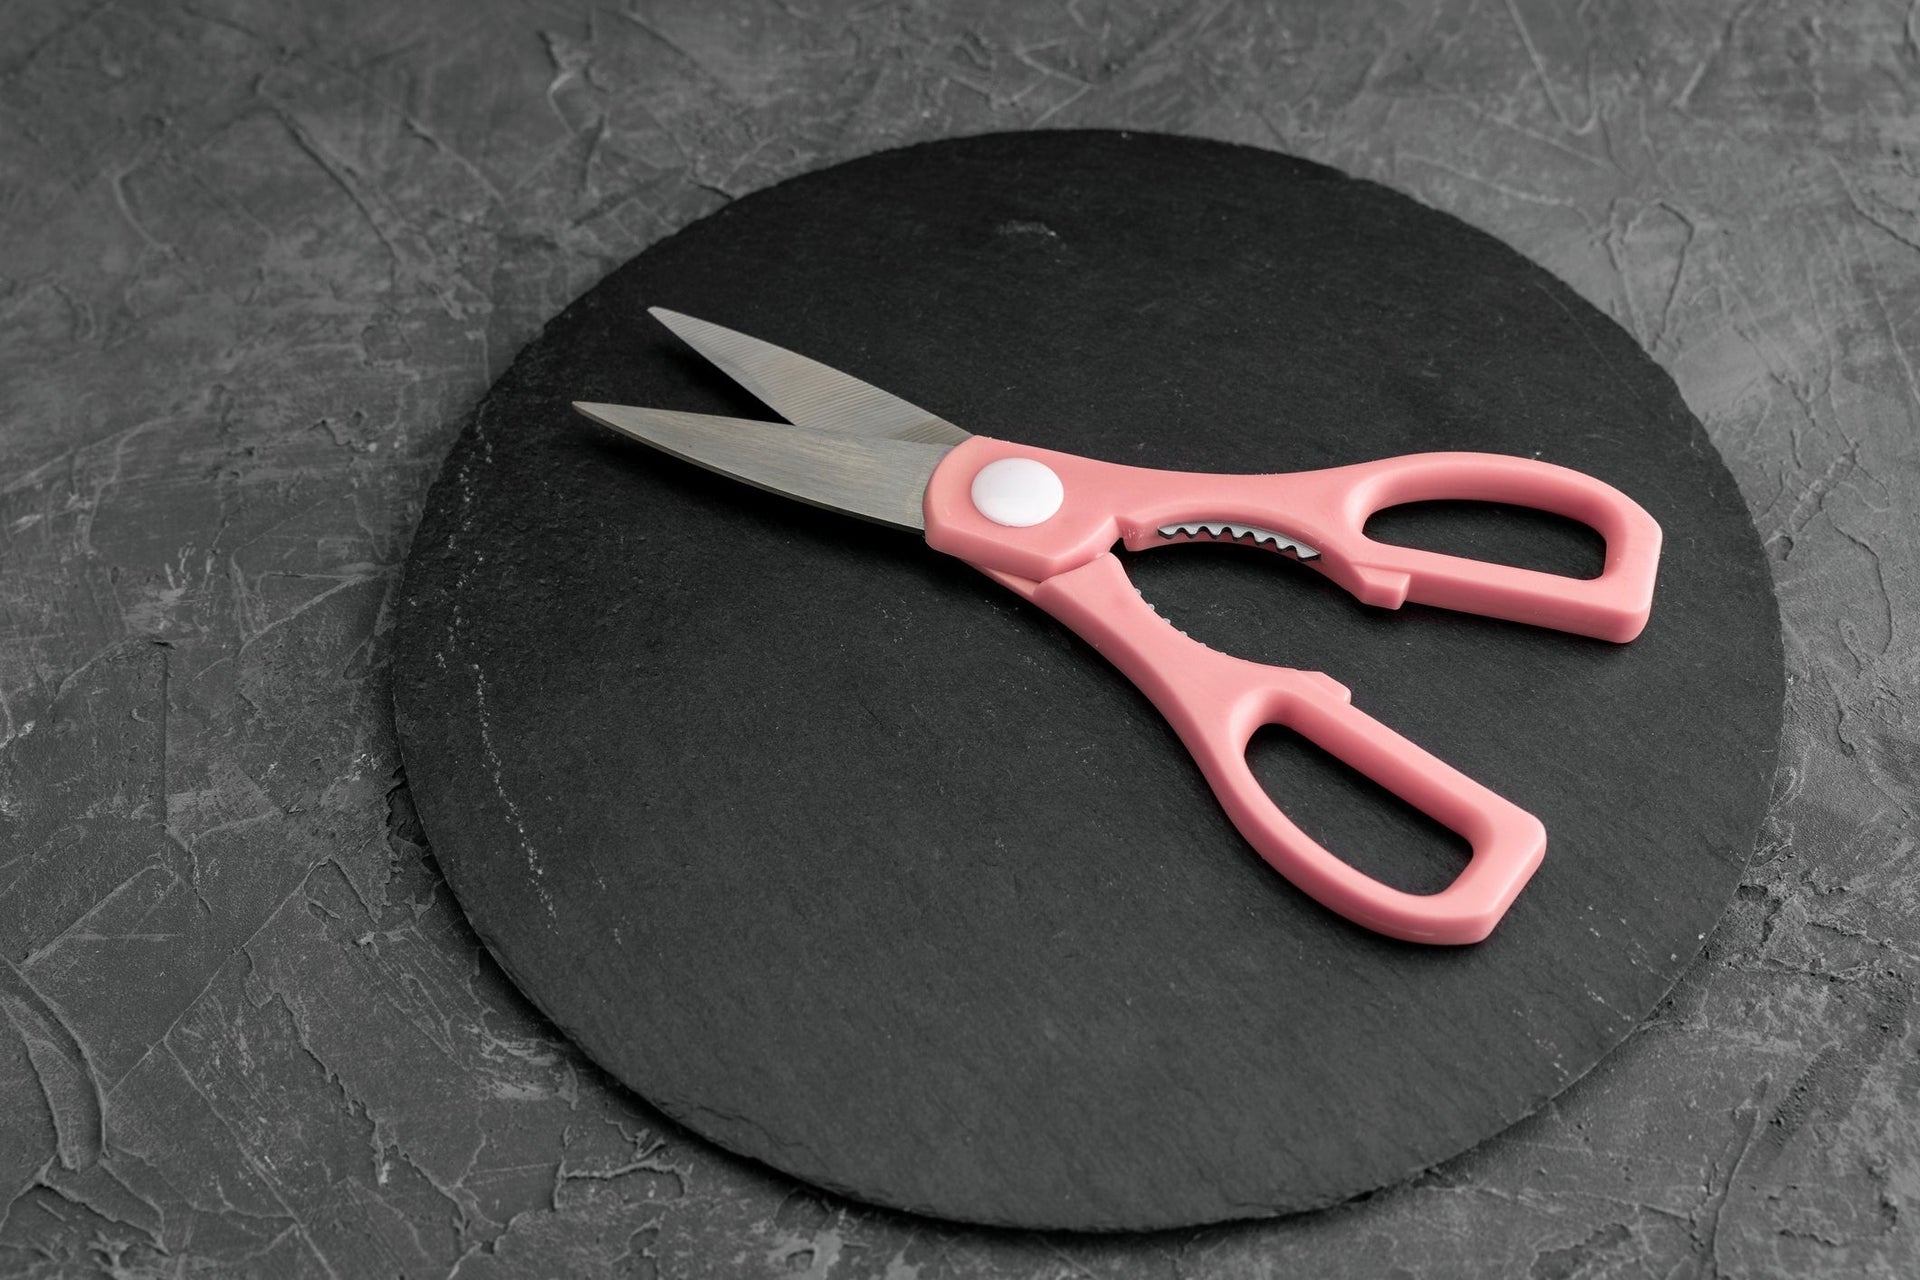  MITSUMOTO SAKARI Japanese Kitchen Scissors All Purpose, Black  Titanium Plated Heavy Duty Kitchen Scissors, Multipurpose Cooking and Herb  Scissors, Micro Serrated: Home & Kitchen